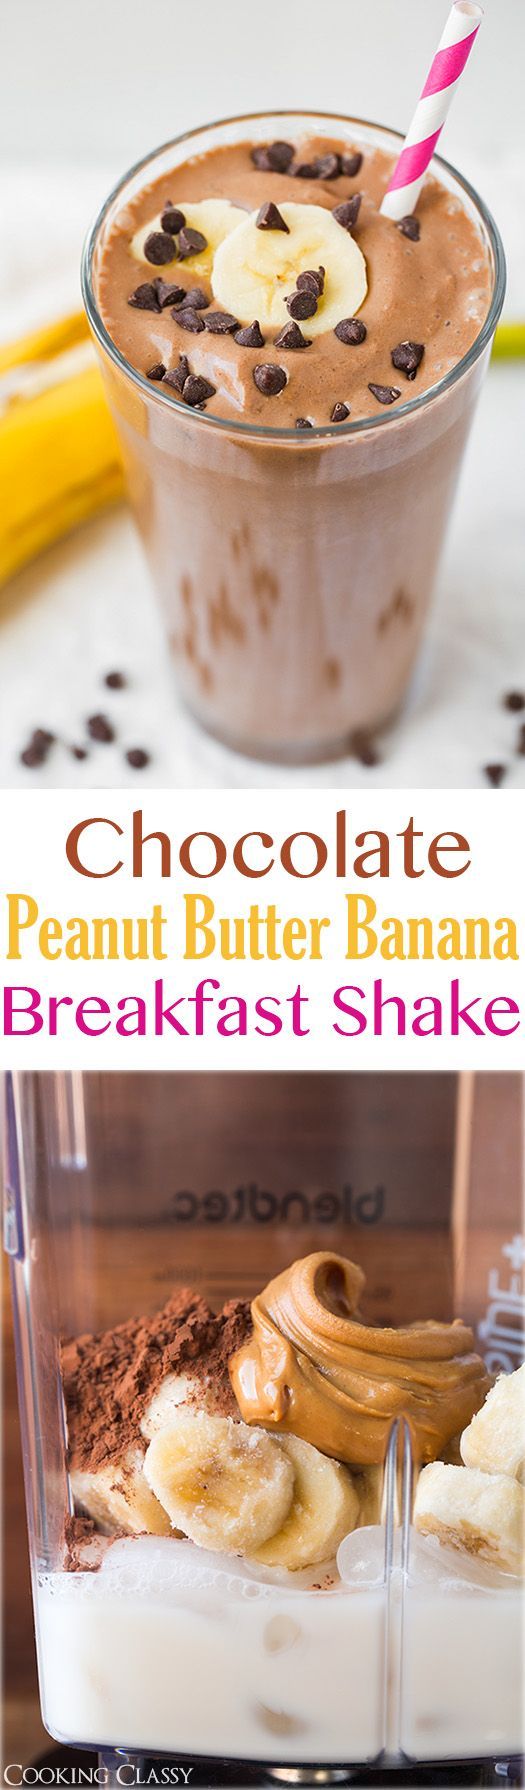 Chocolate Peanut Butter Banana Breakfast Shake – healthy, easy to make and tastes like a shake!